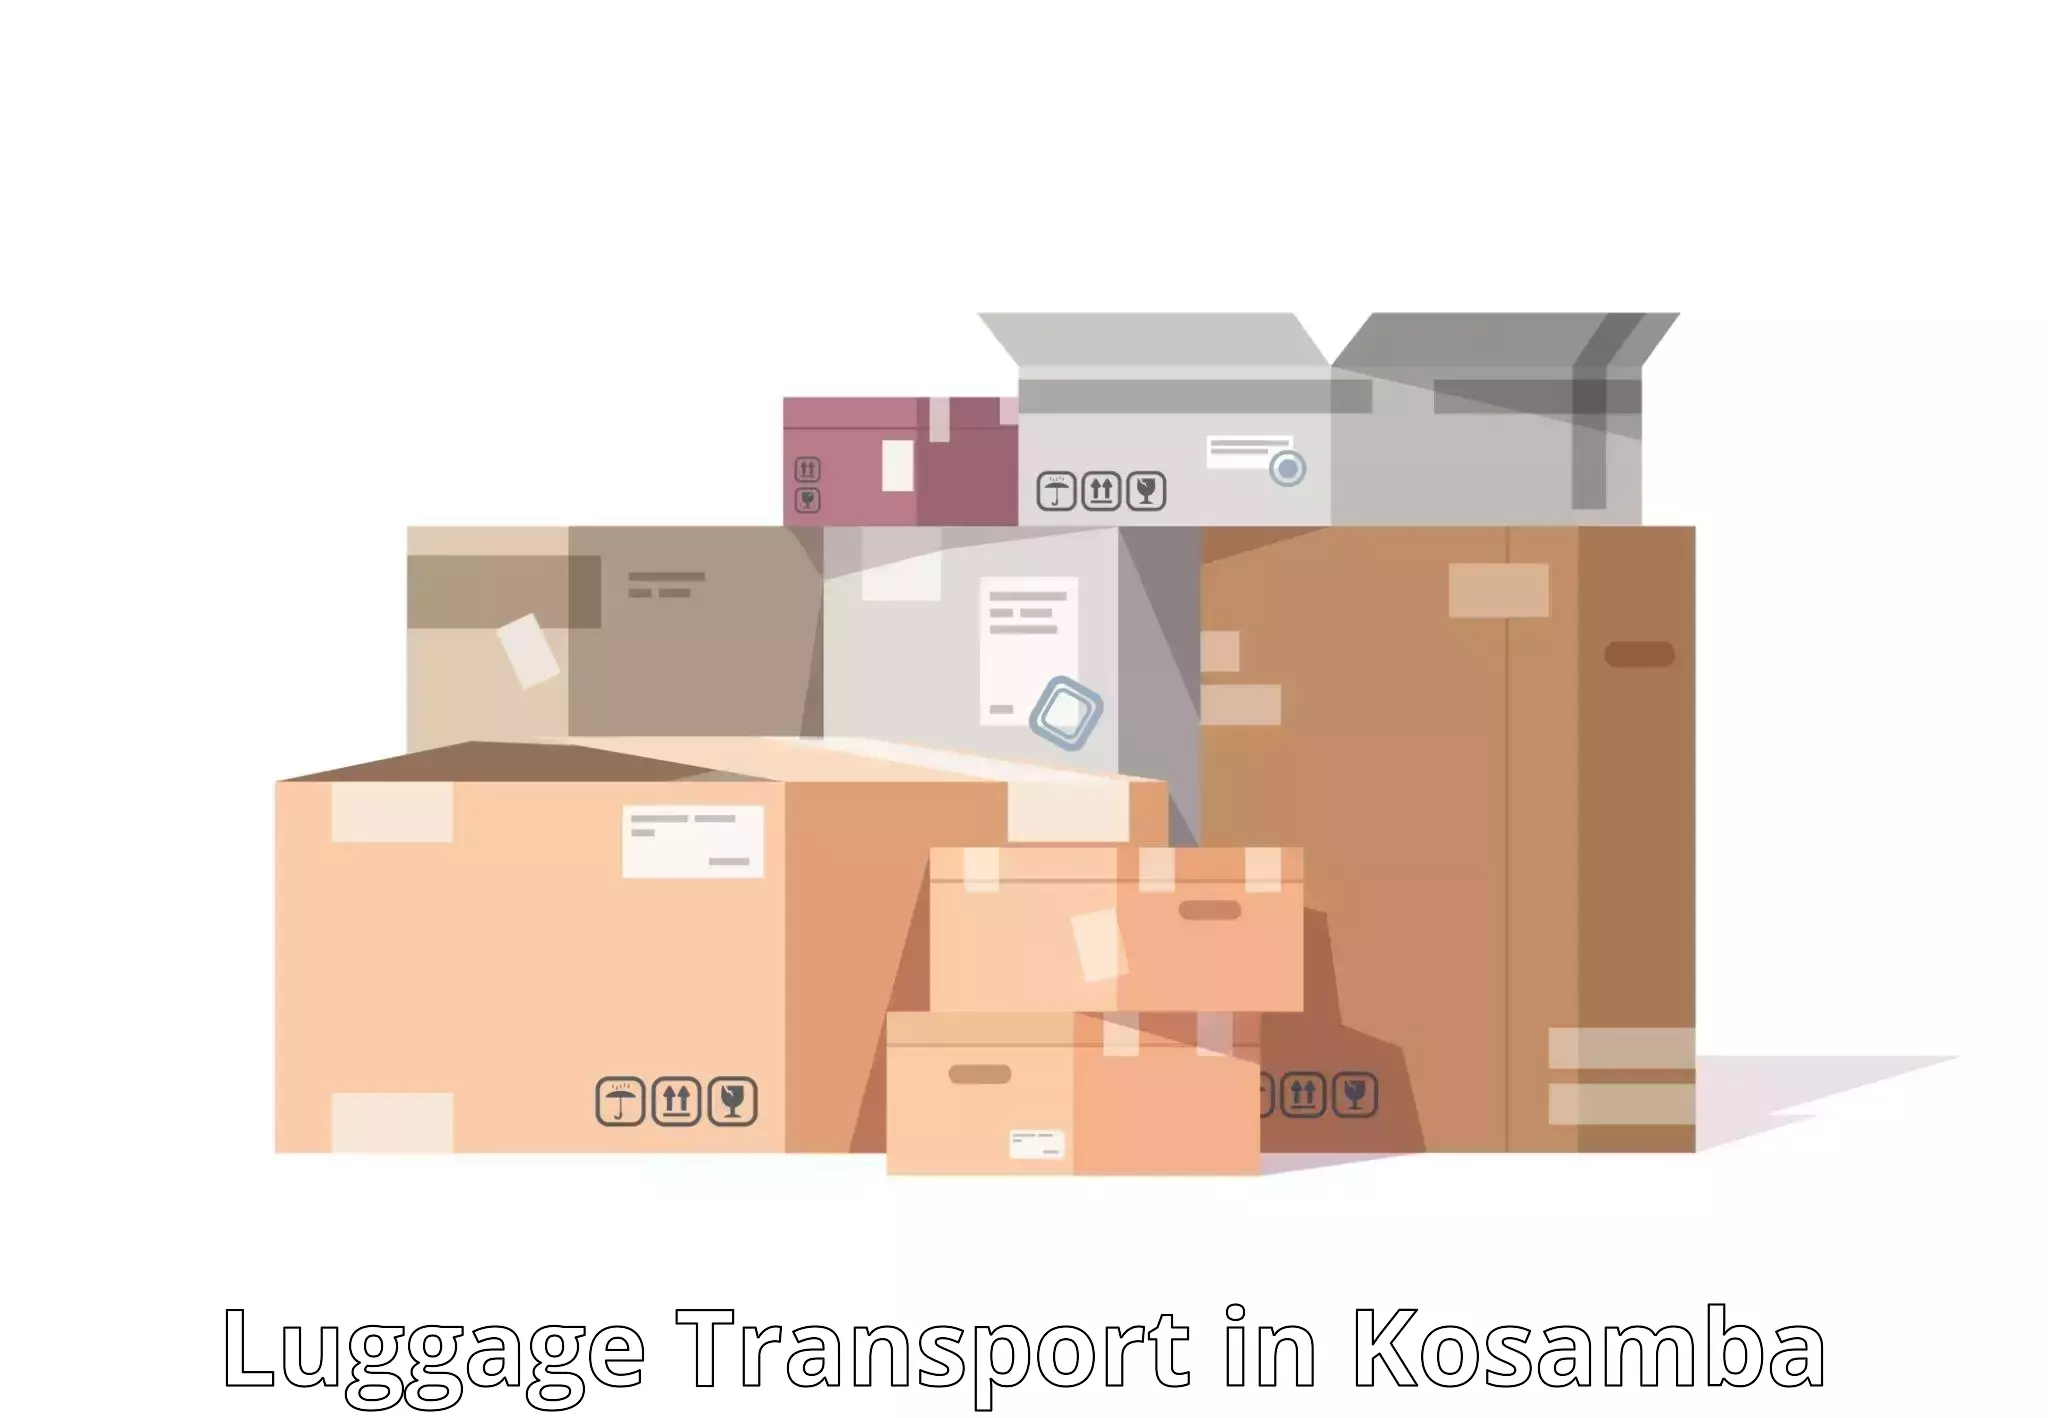 Baggage transport services in Kosamba